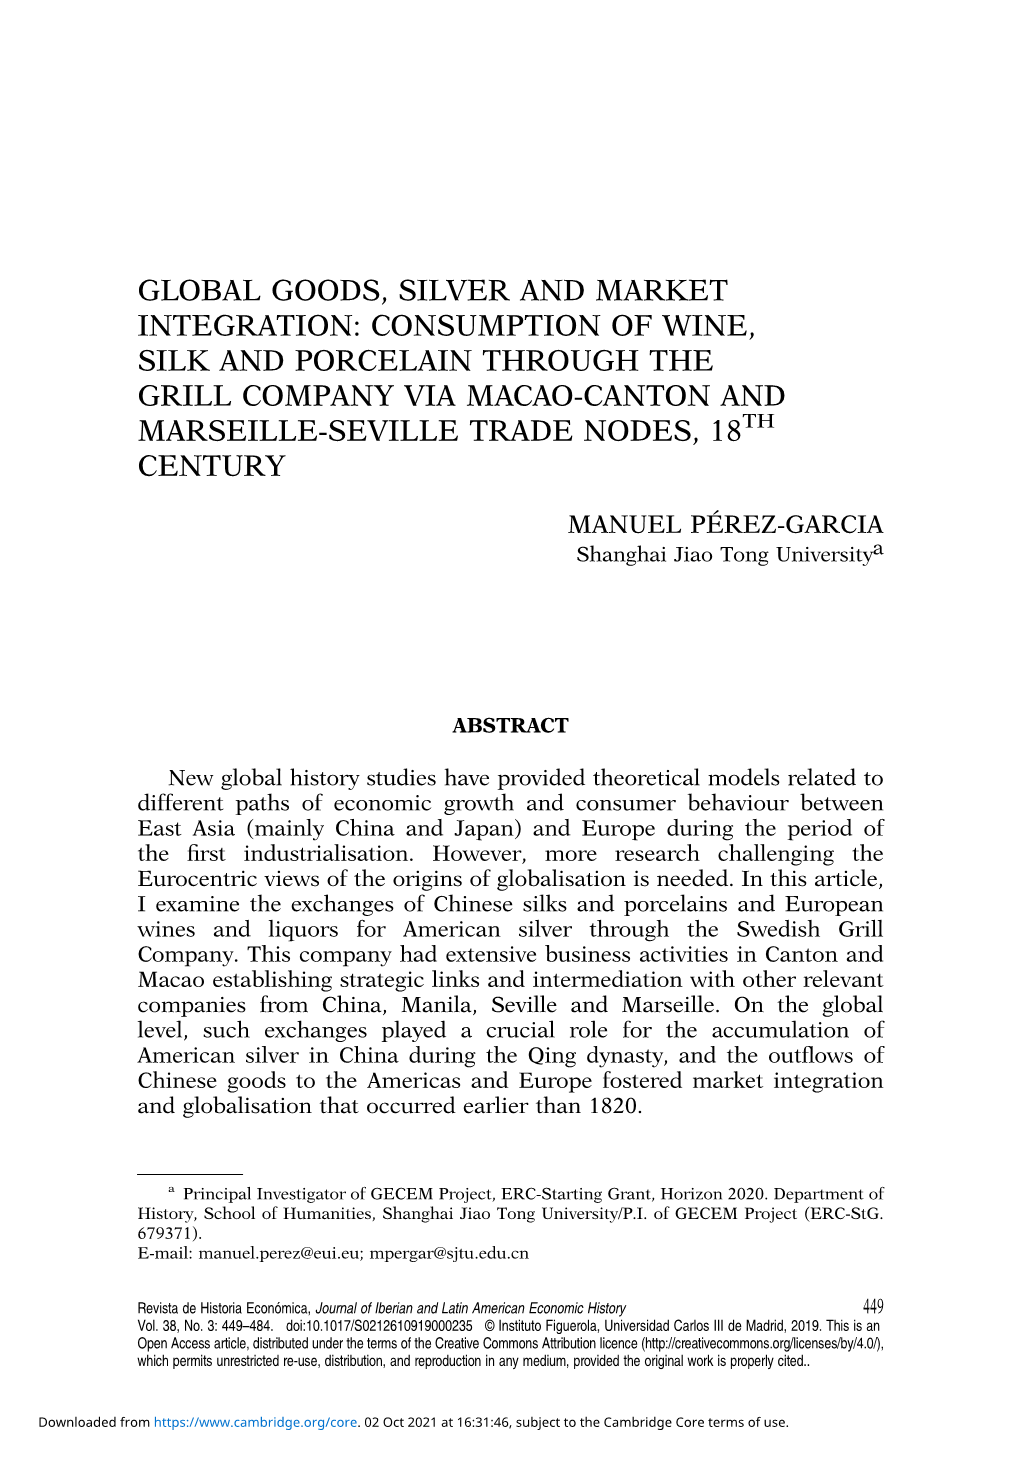 Global Goods, Silver and Market Integration